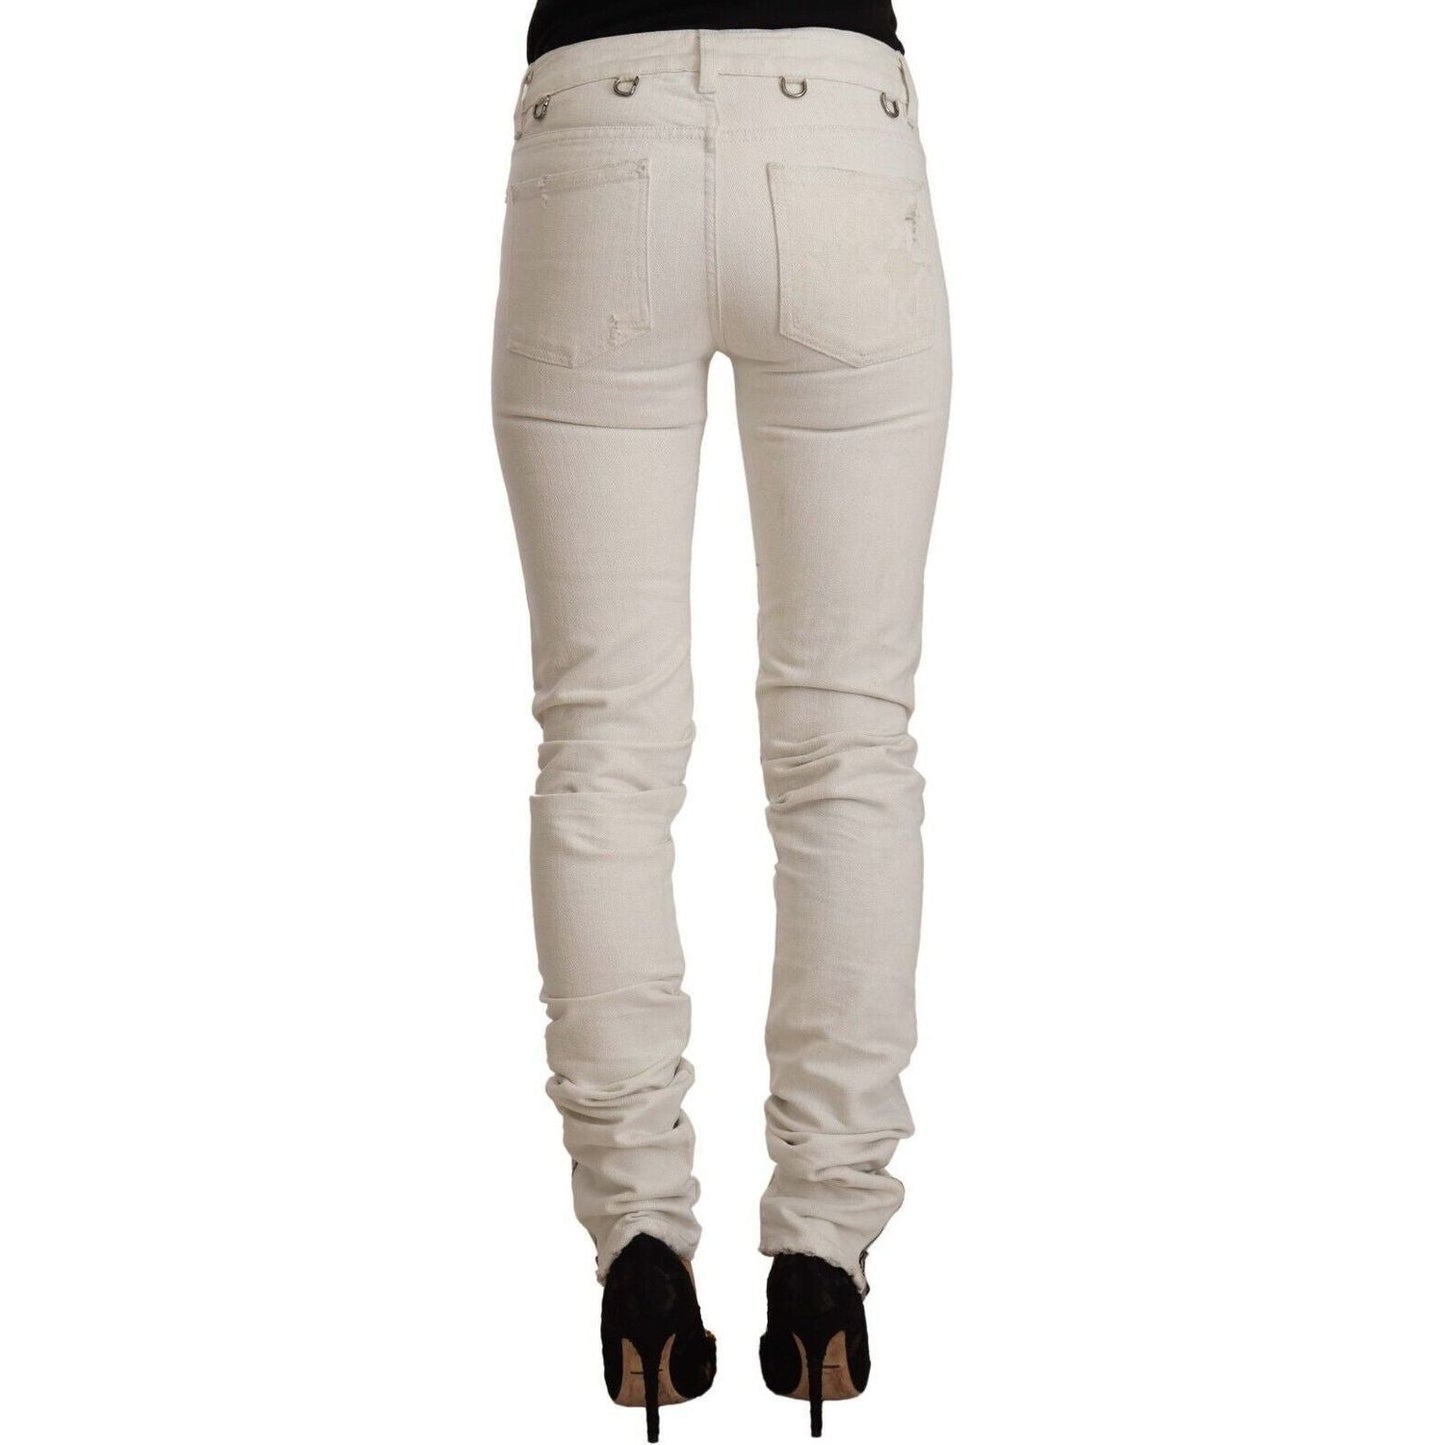 Karl Lagerfeld Chic White Mid-Waist Slim Fit Jeans white-mid-waist-cotton-denim-slim-fit-jeans s-l1600-12-1-45513ee2-326.jpg